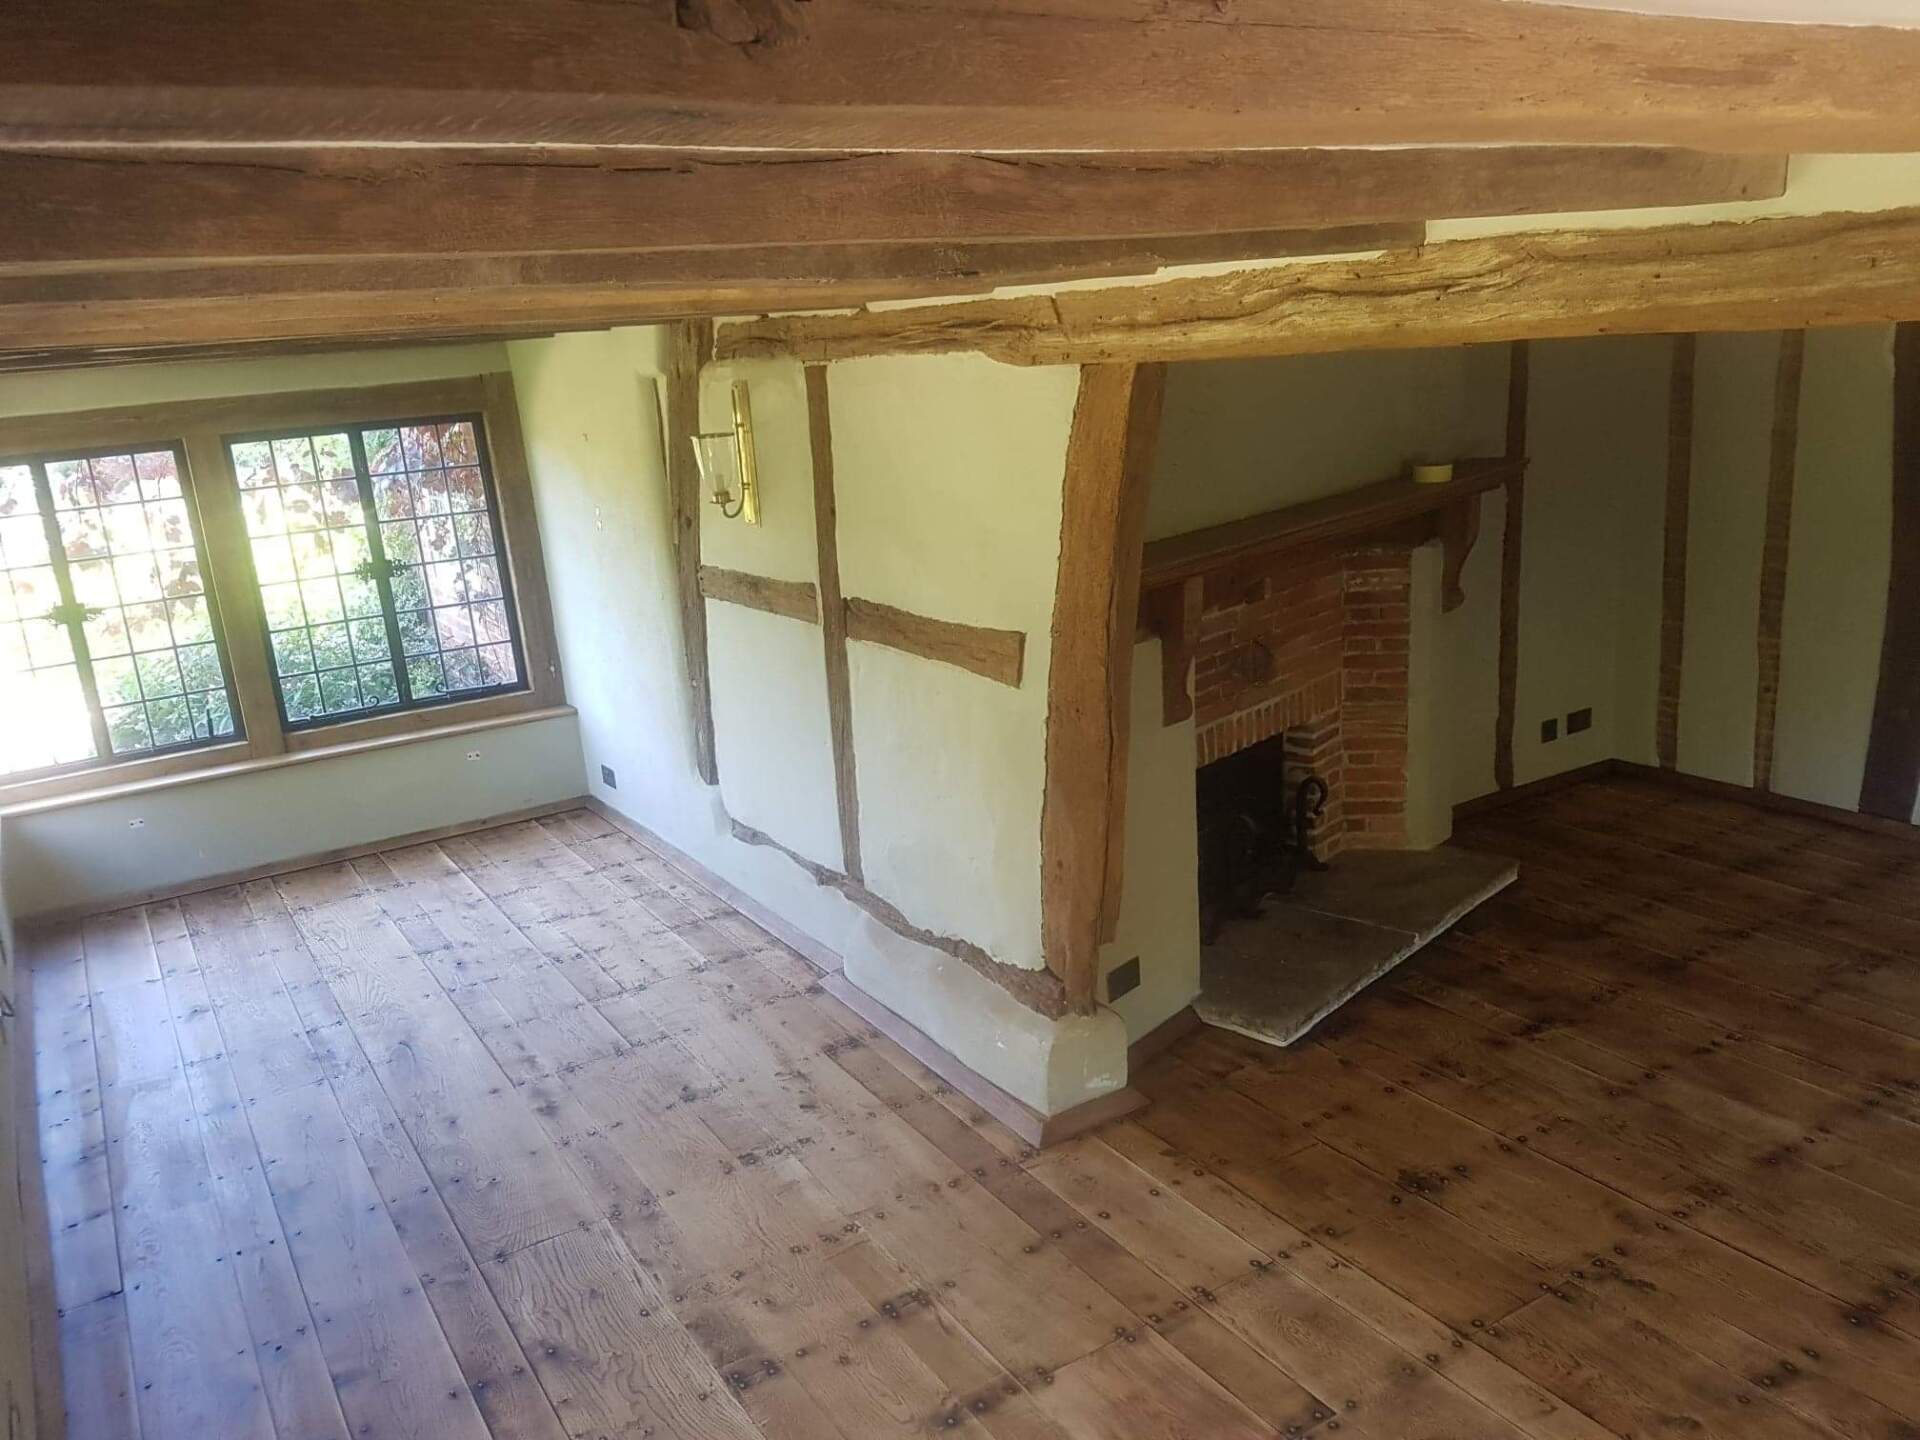 Restored oak floor to match beams (was black)